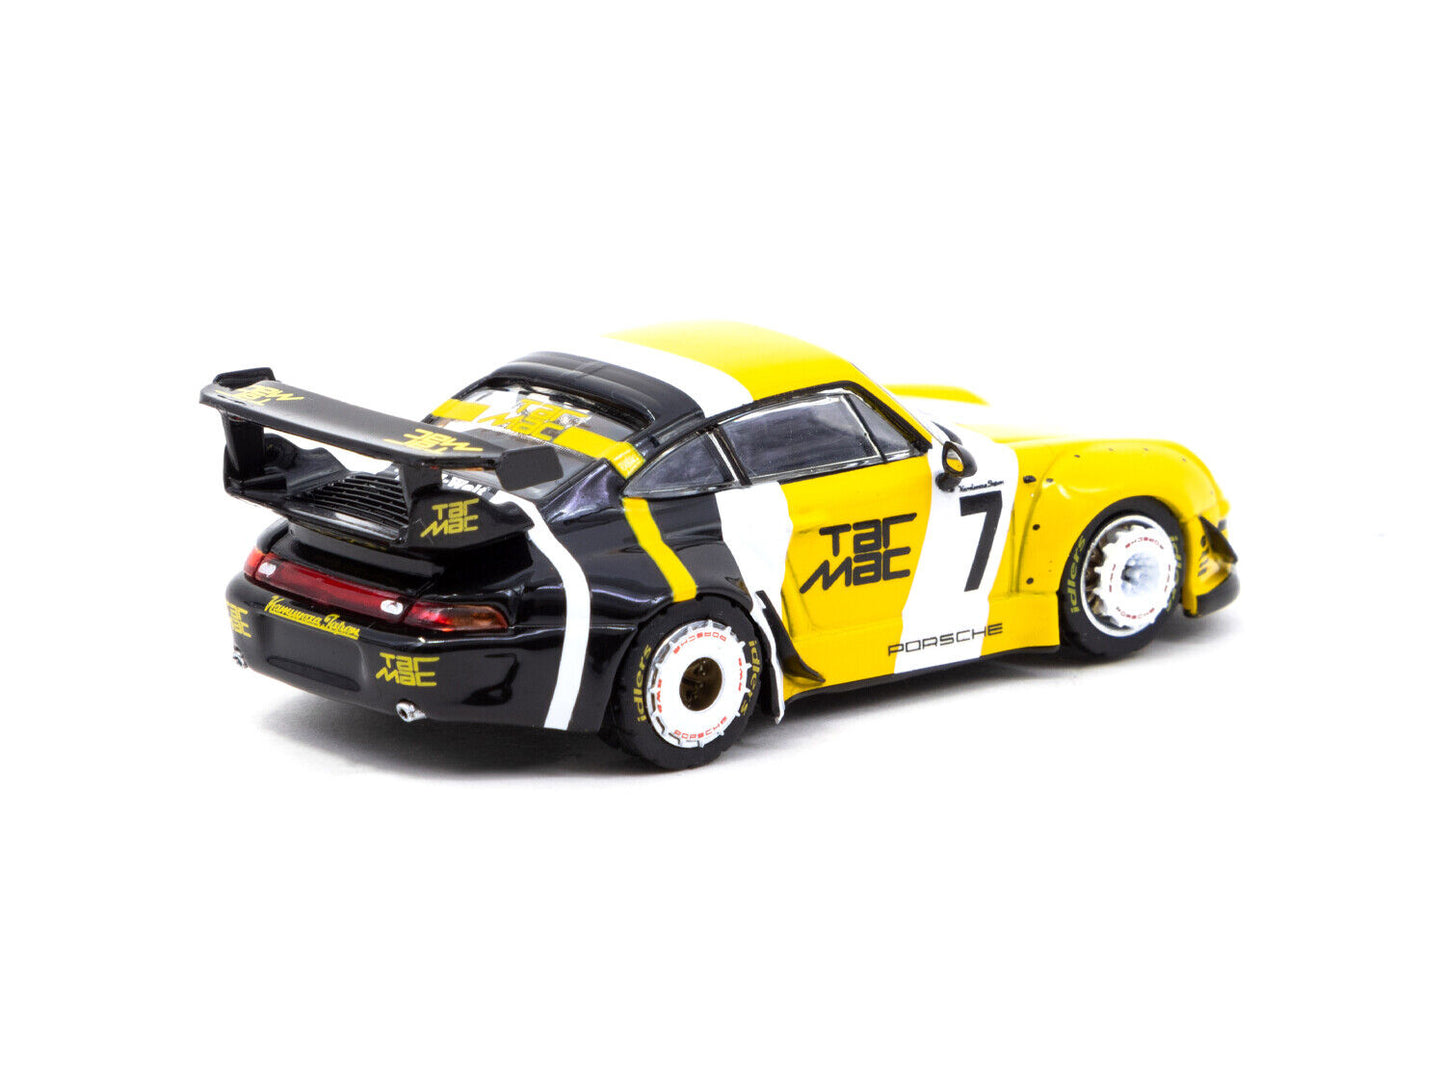 Tarmac Porsche RWB 993 Tarmac Yellow Black 1:64